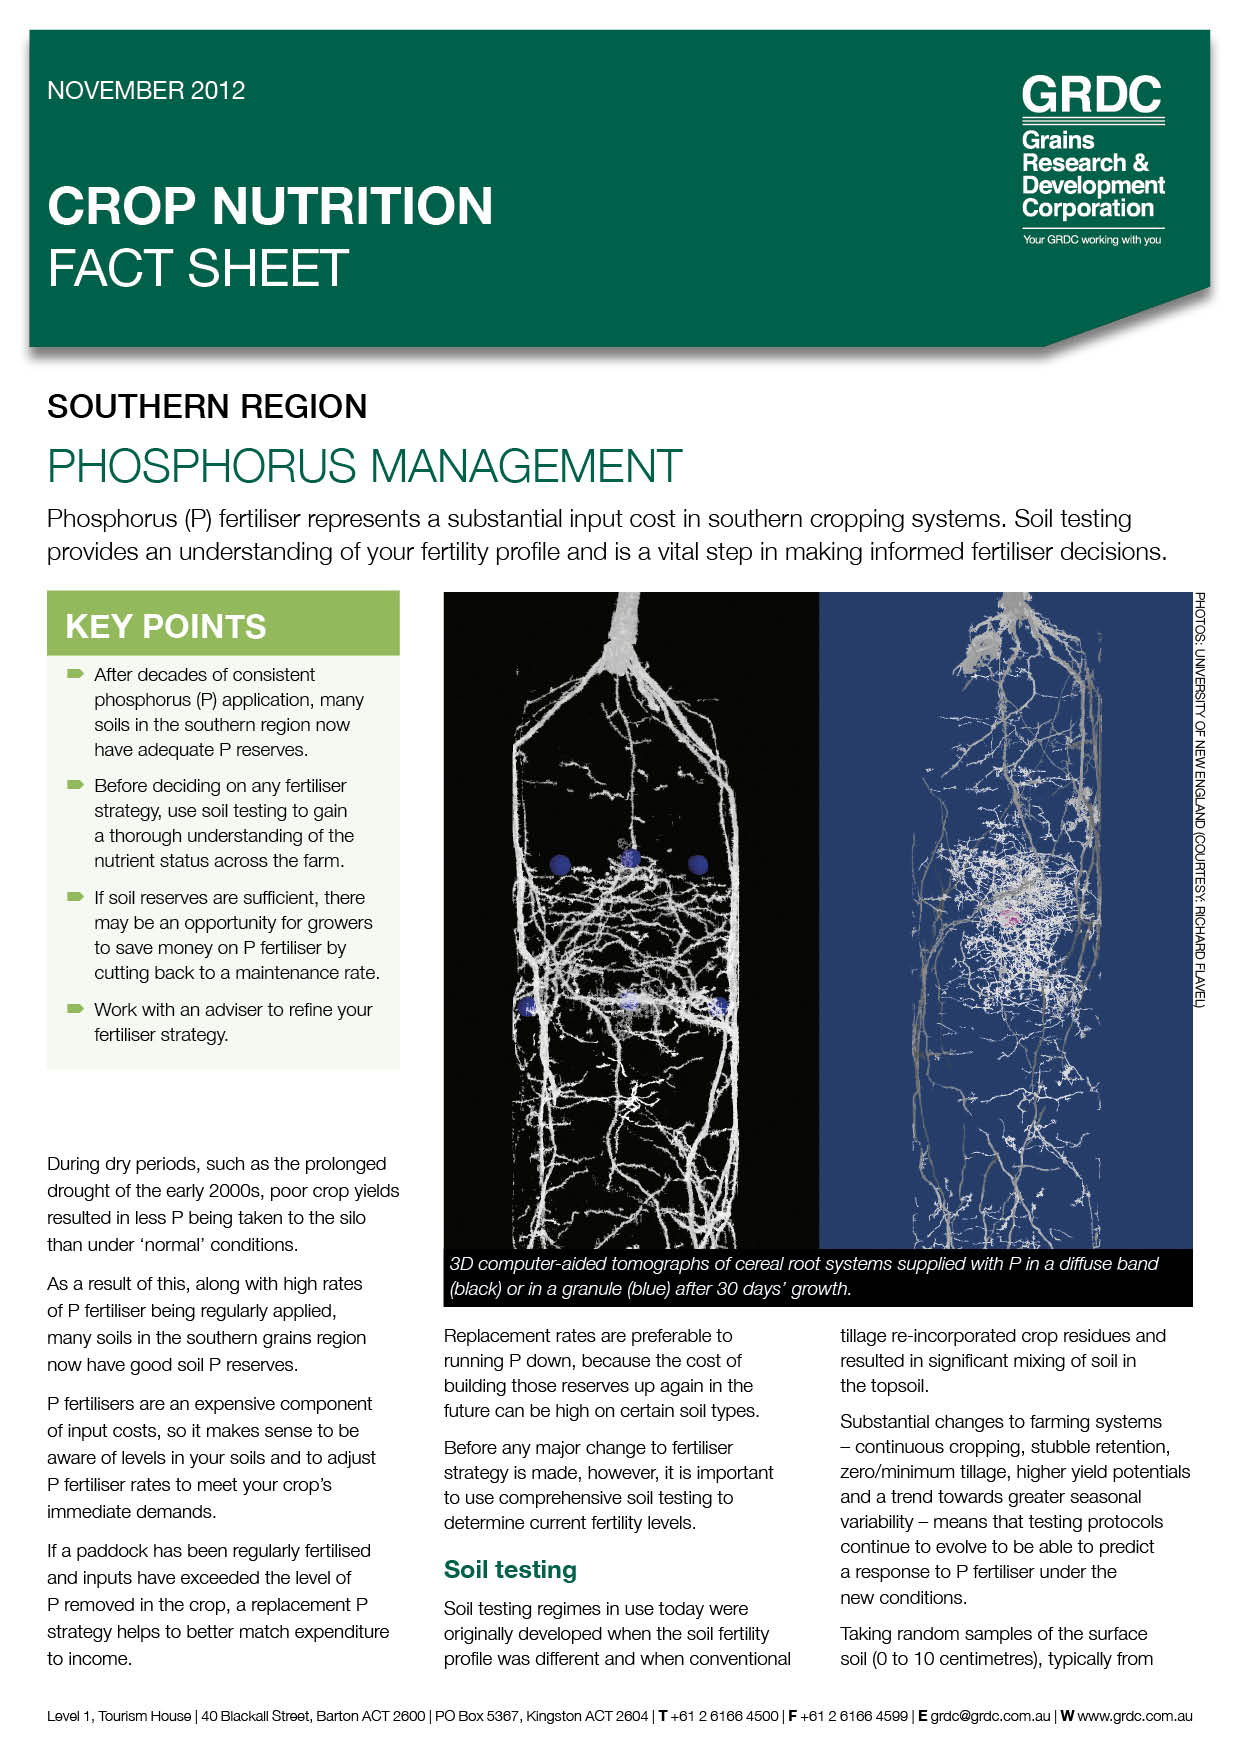 Image of Phosphorus Management Southern Region Fact Sheet